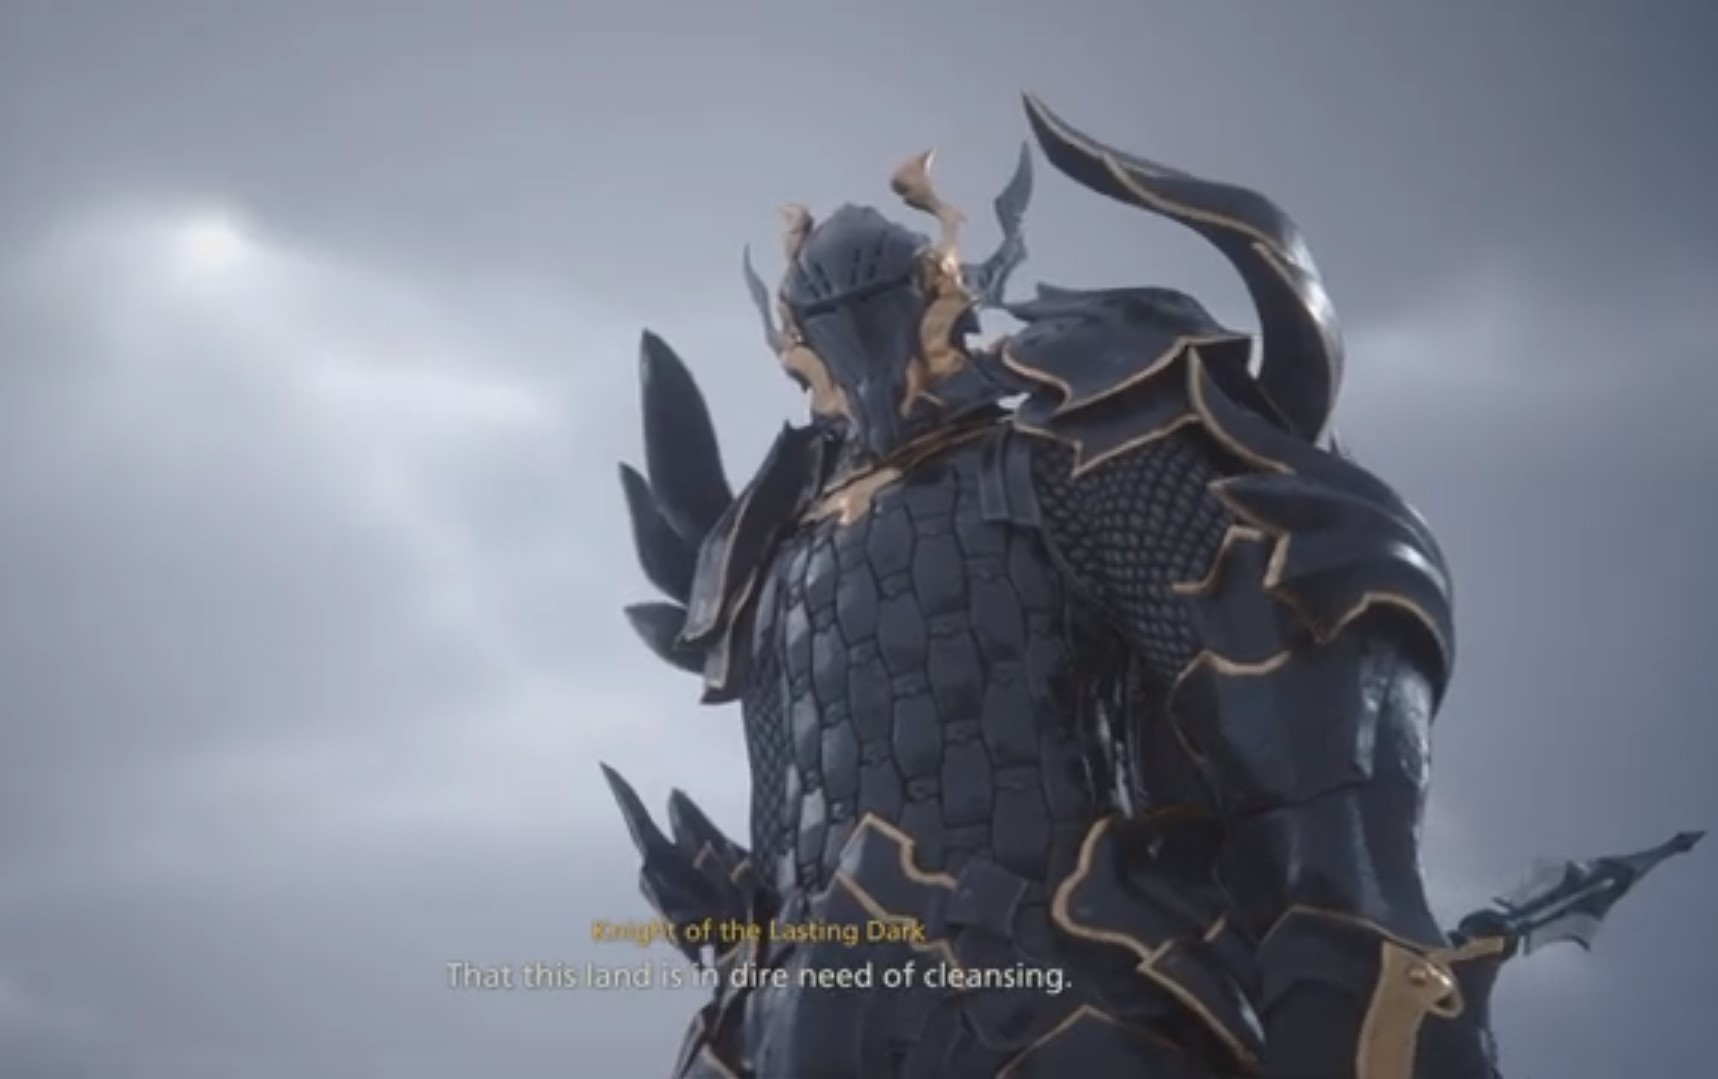 Knight of the Lasting Dark in Final Fantasy 16